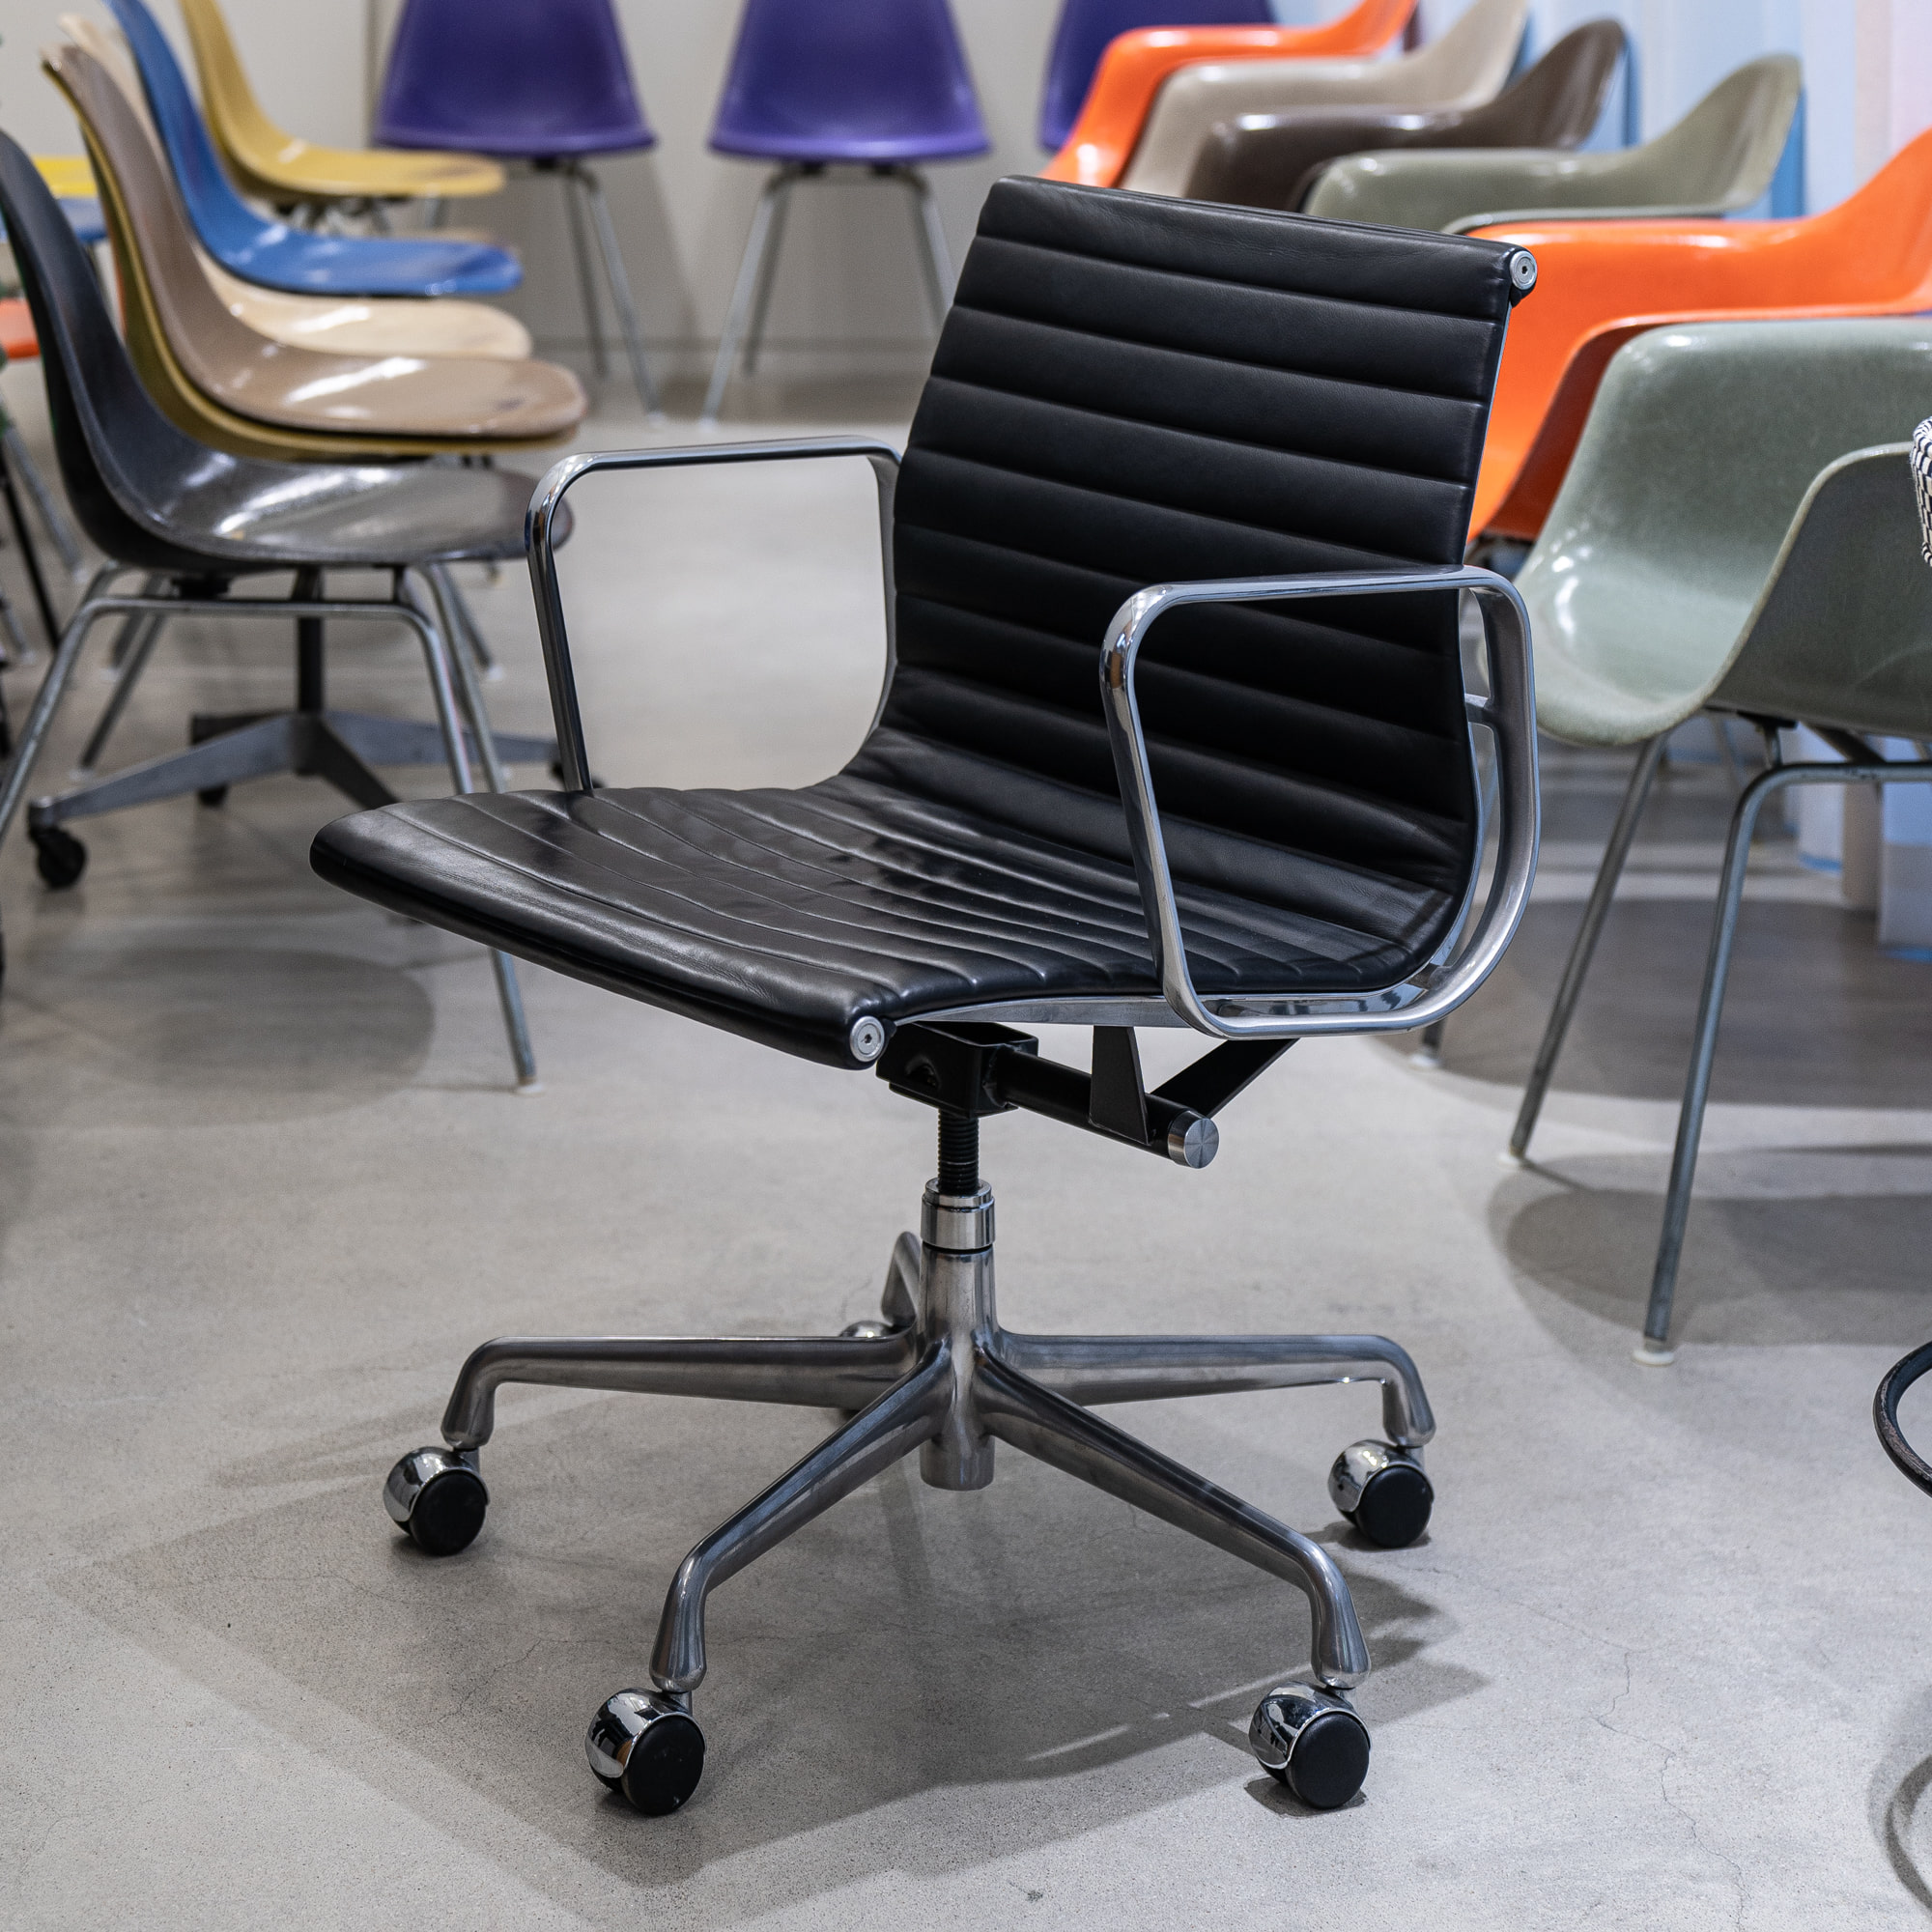 Aluminum Group Management Chair (Black Leather)